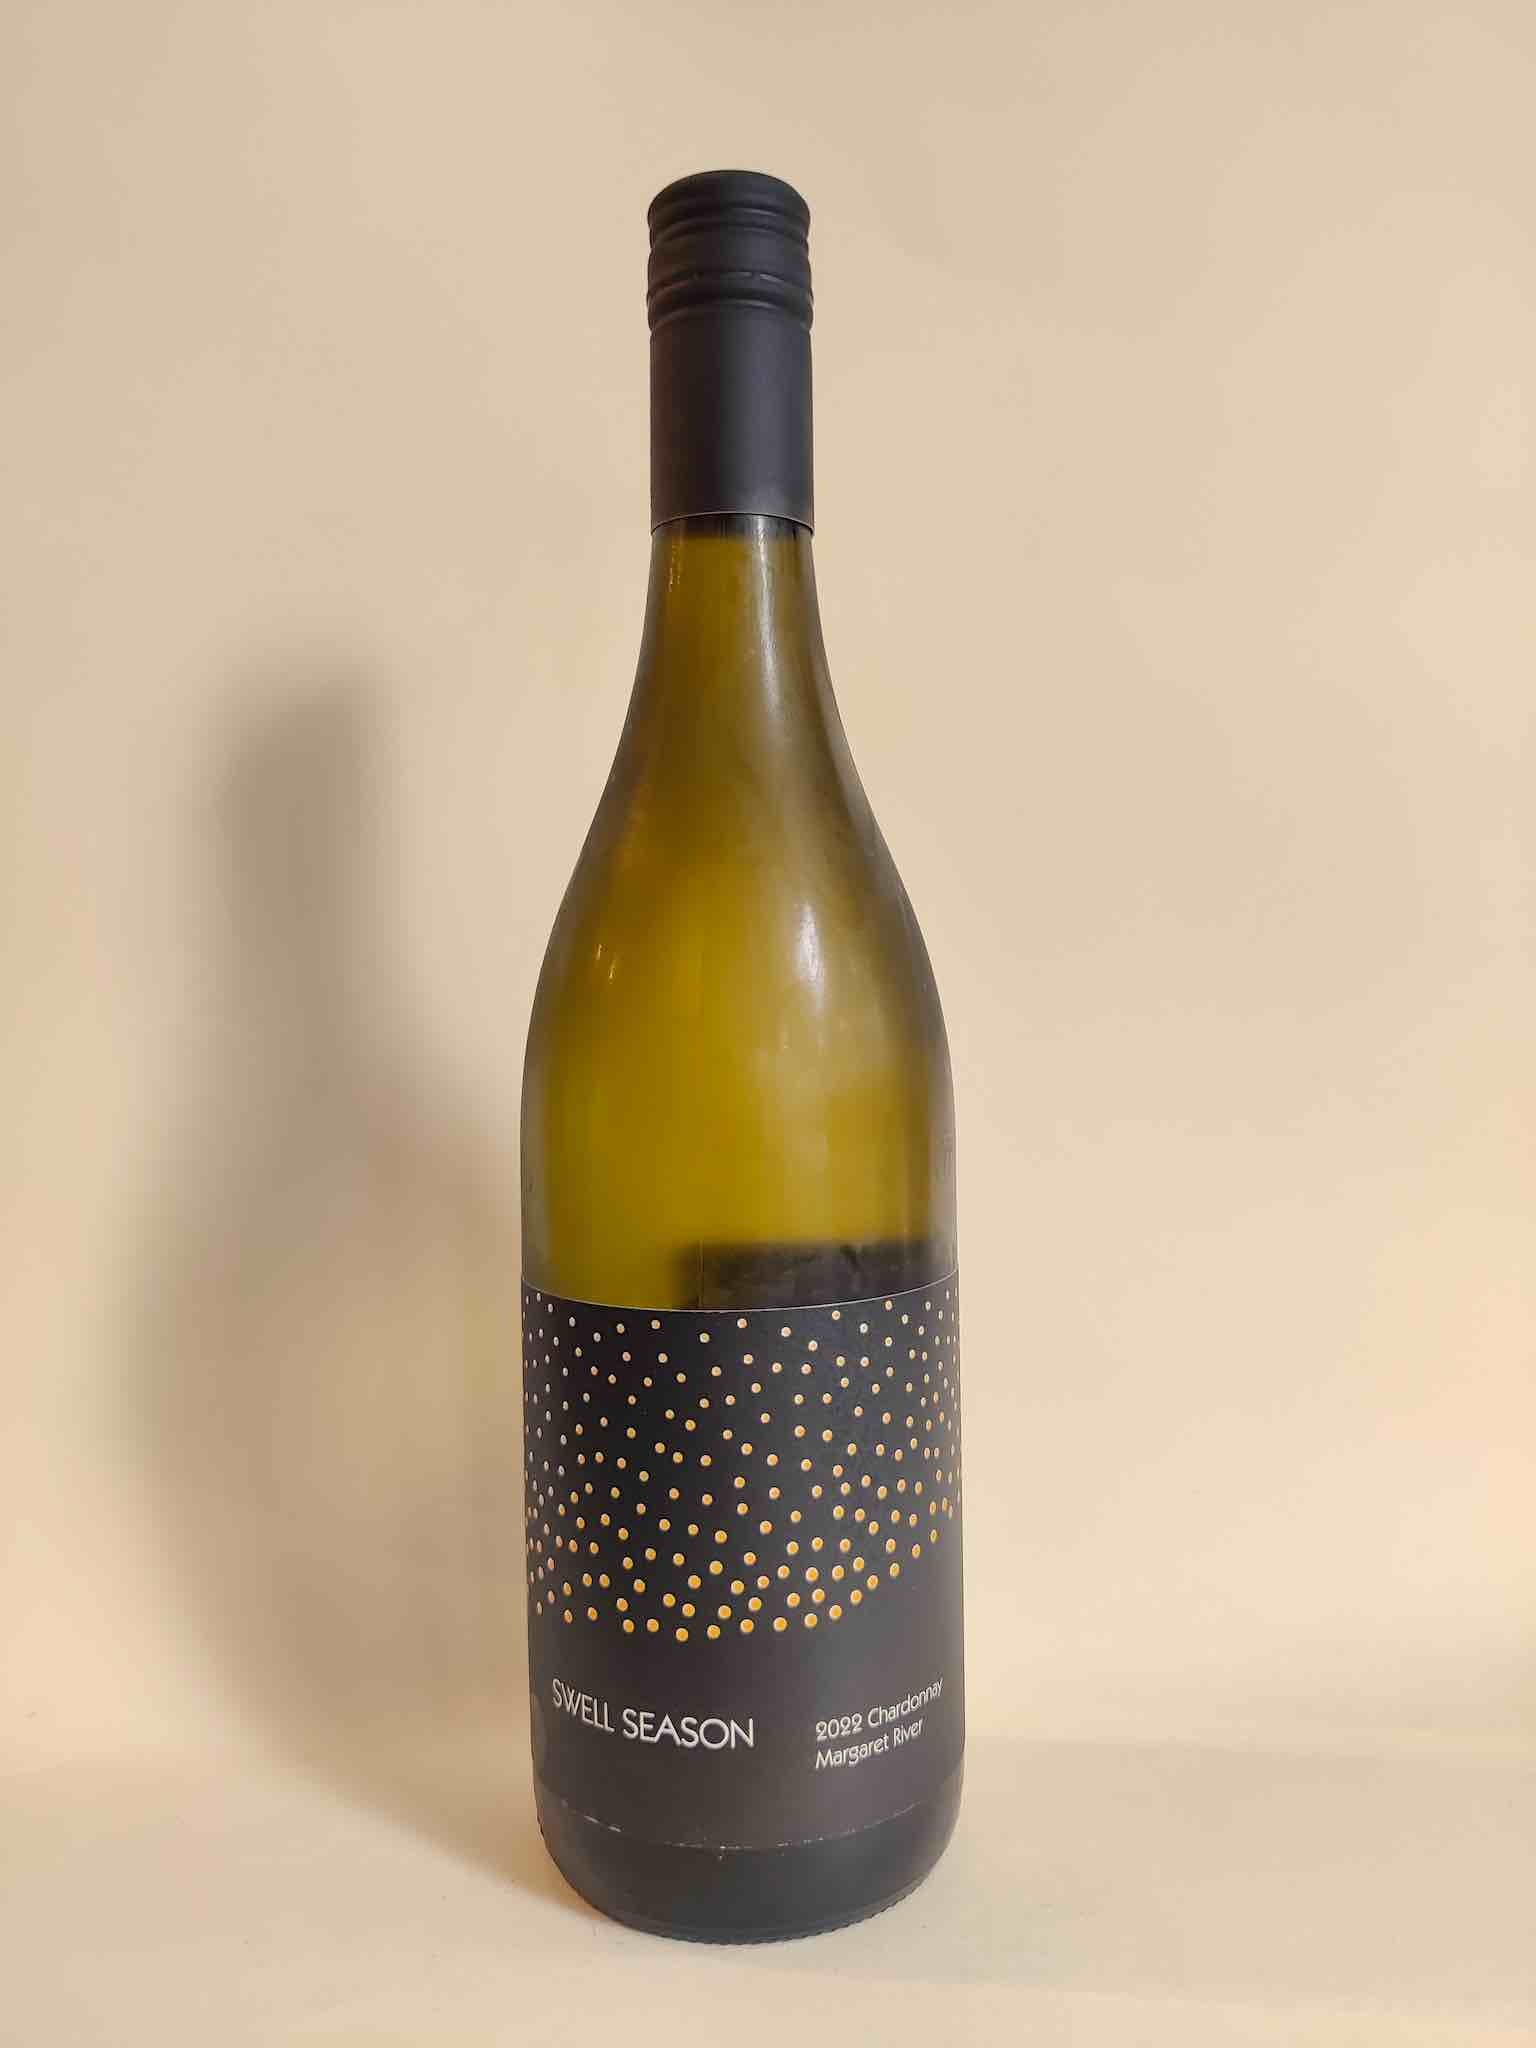 A bottle of 2022 Swell Season Chardonnay from Margaret River, Western Australia. 